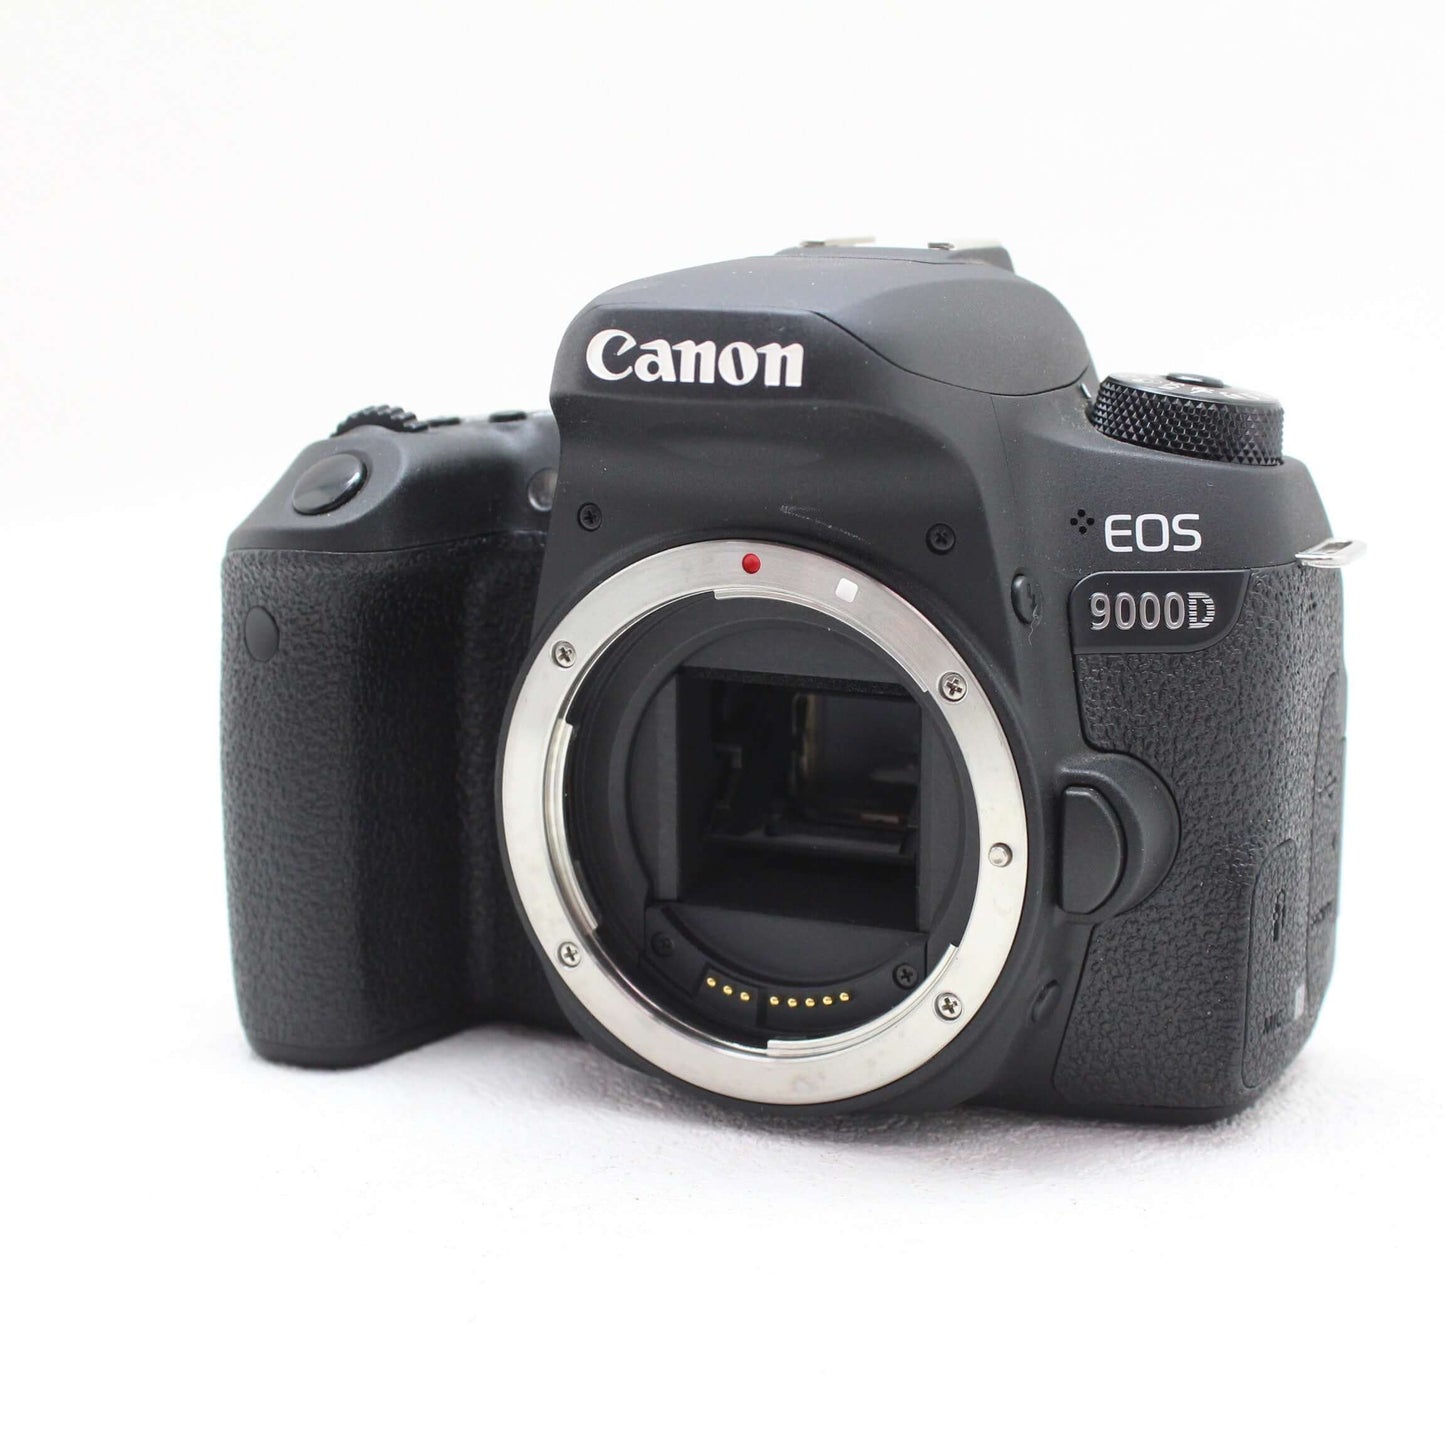 中古品 Canon EOS 9000D